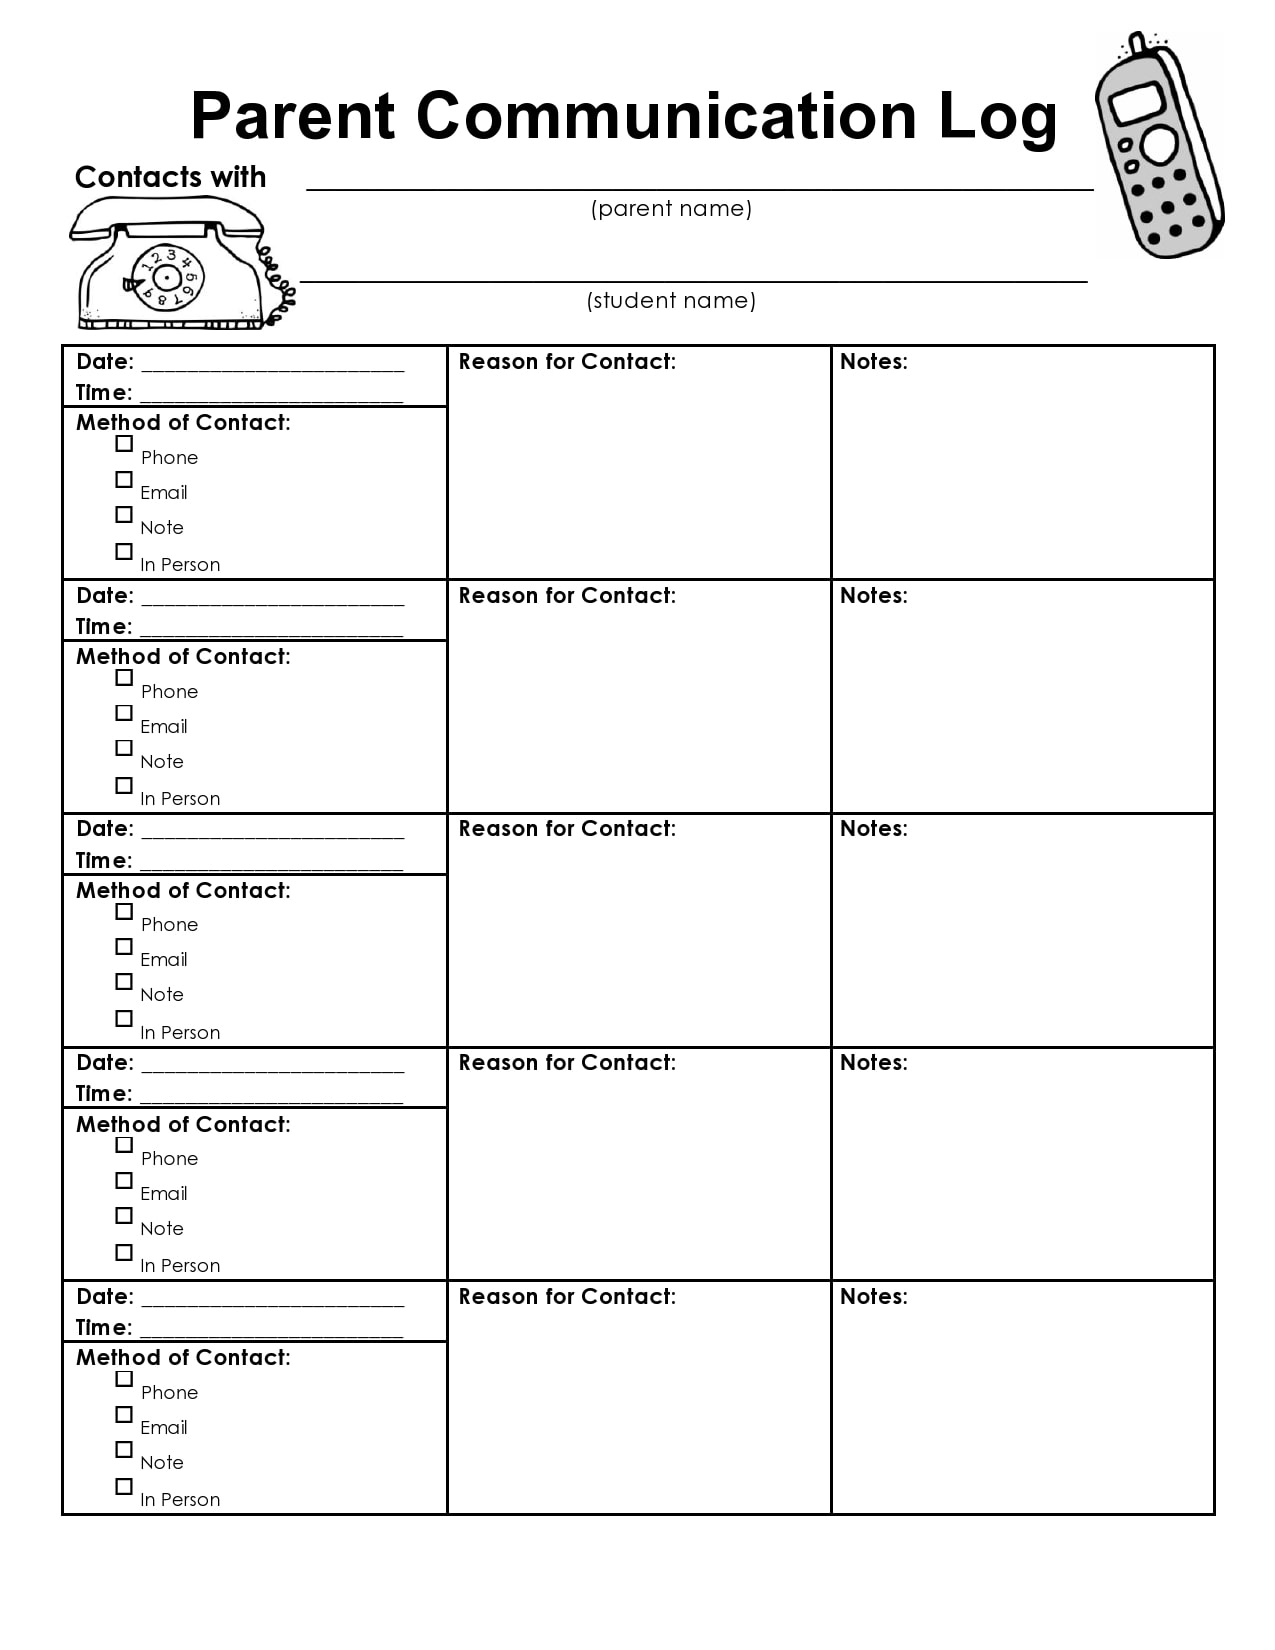 Parent Communication Log Sheet